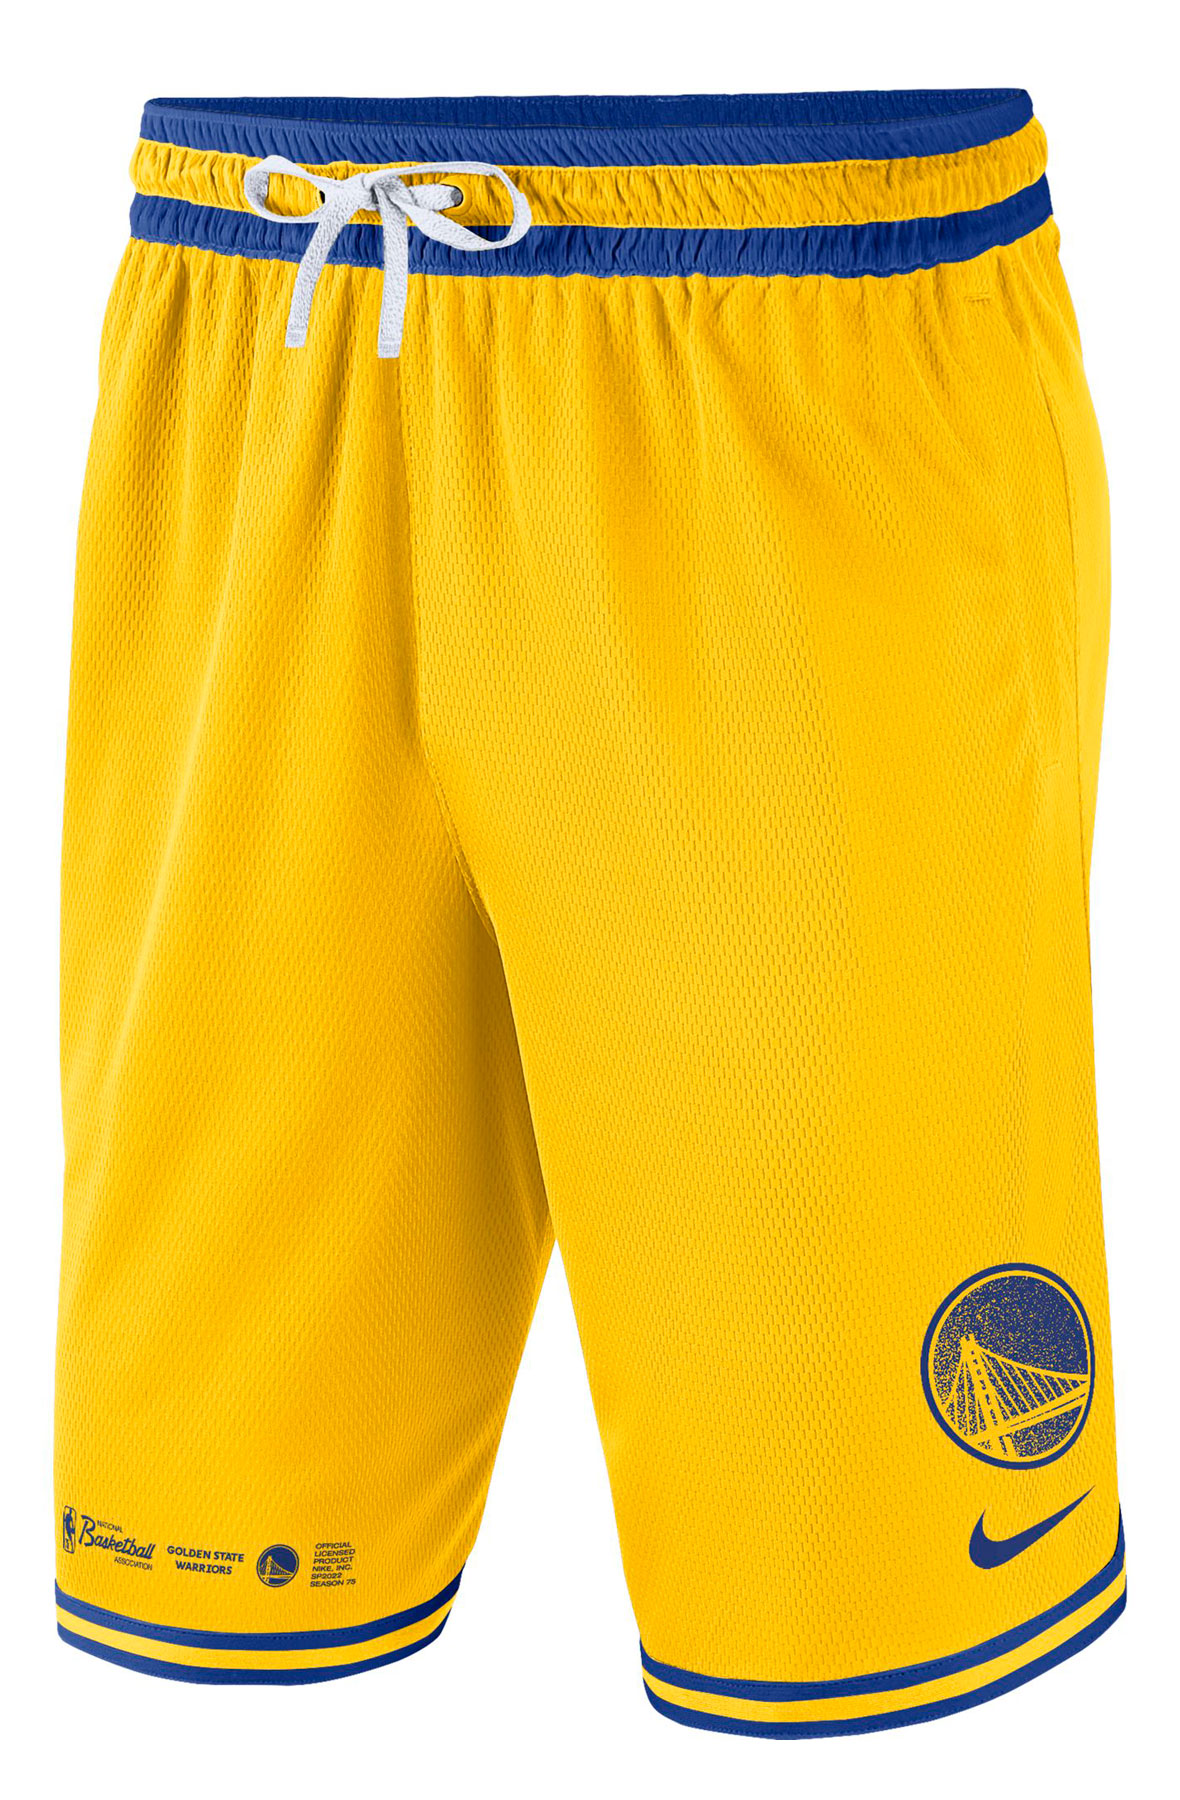 golden state warriors yellow shorts